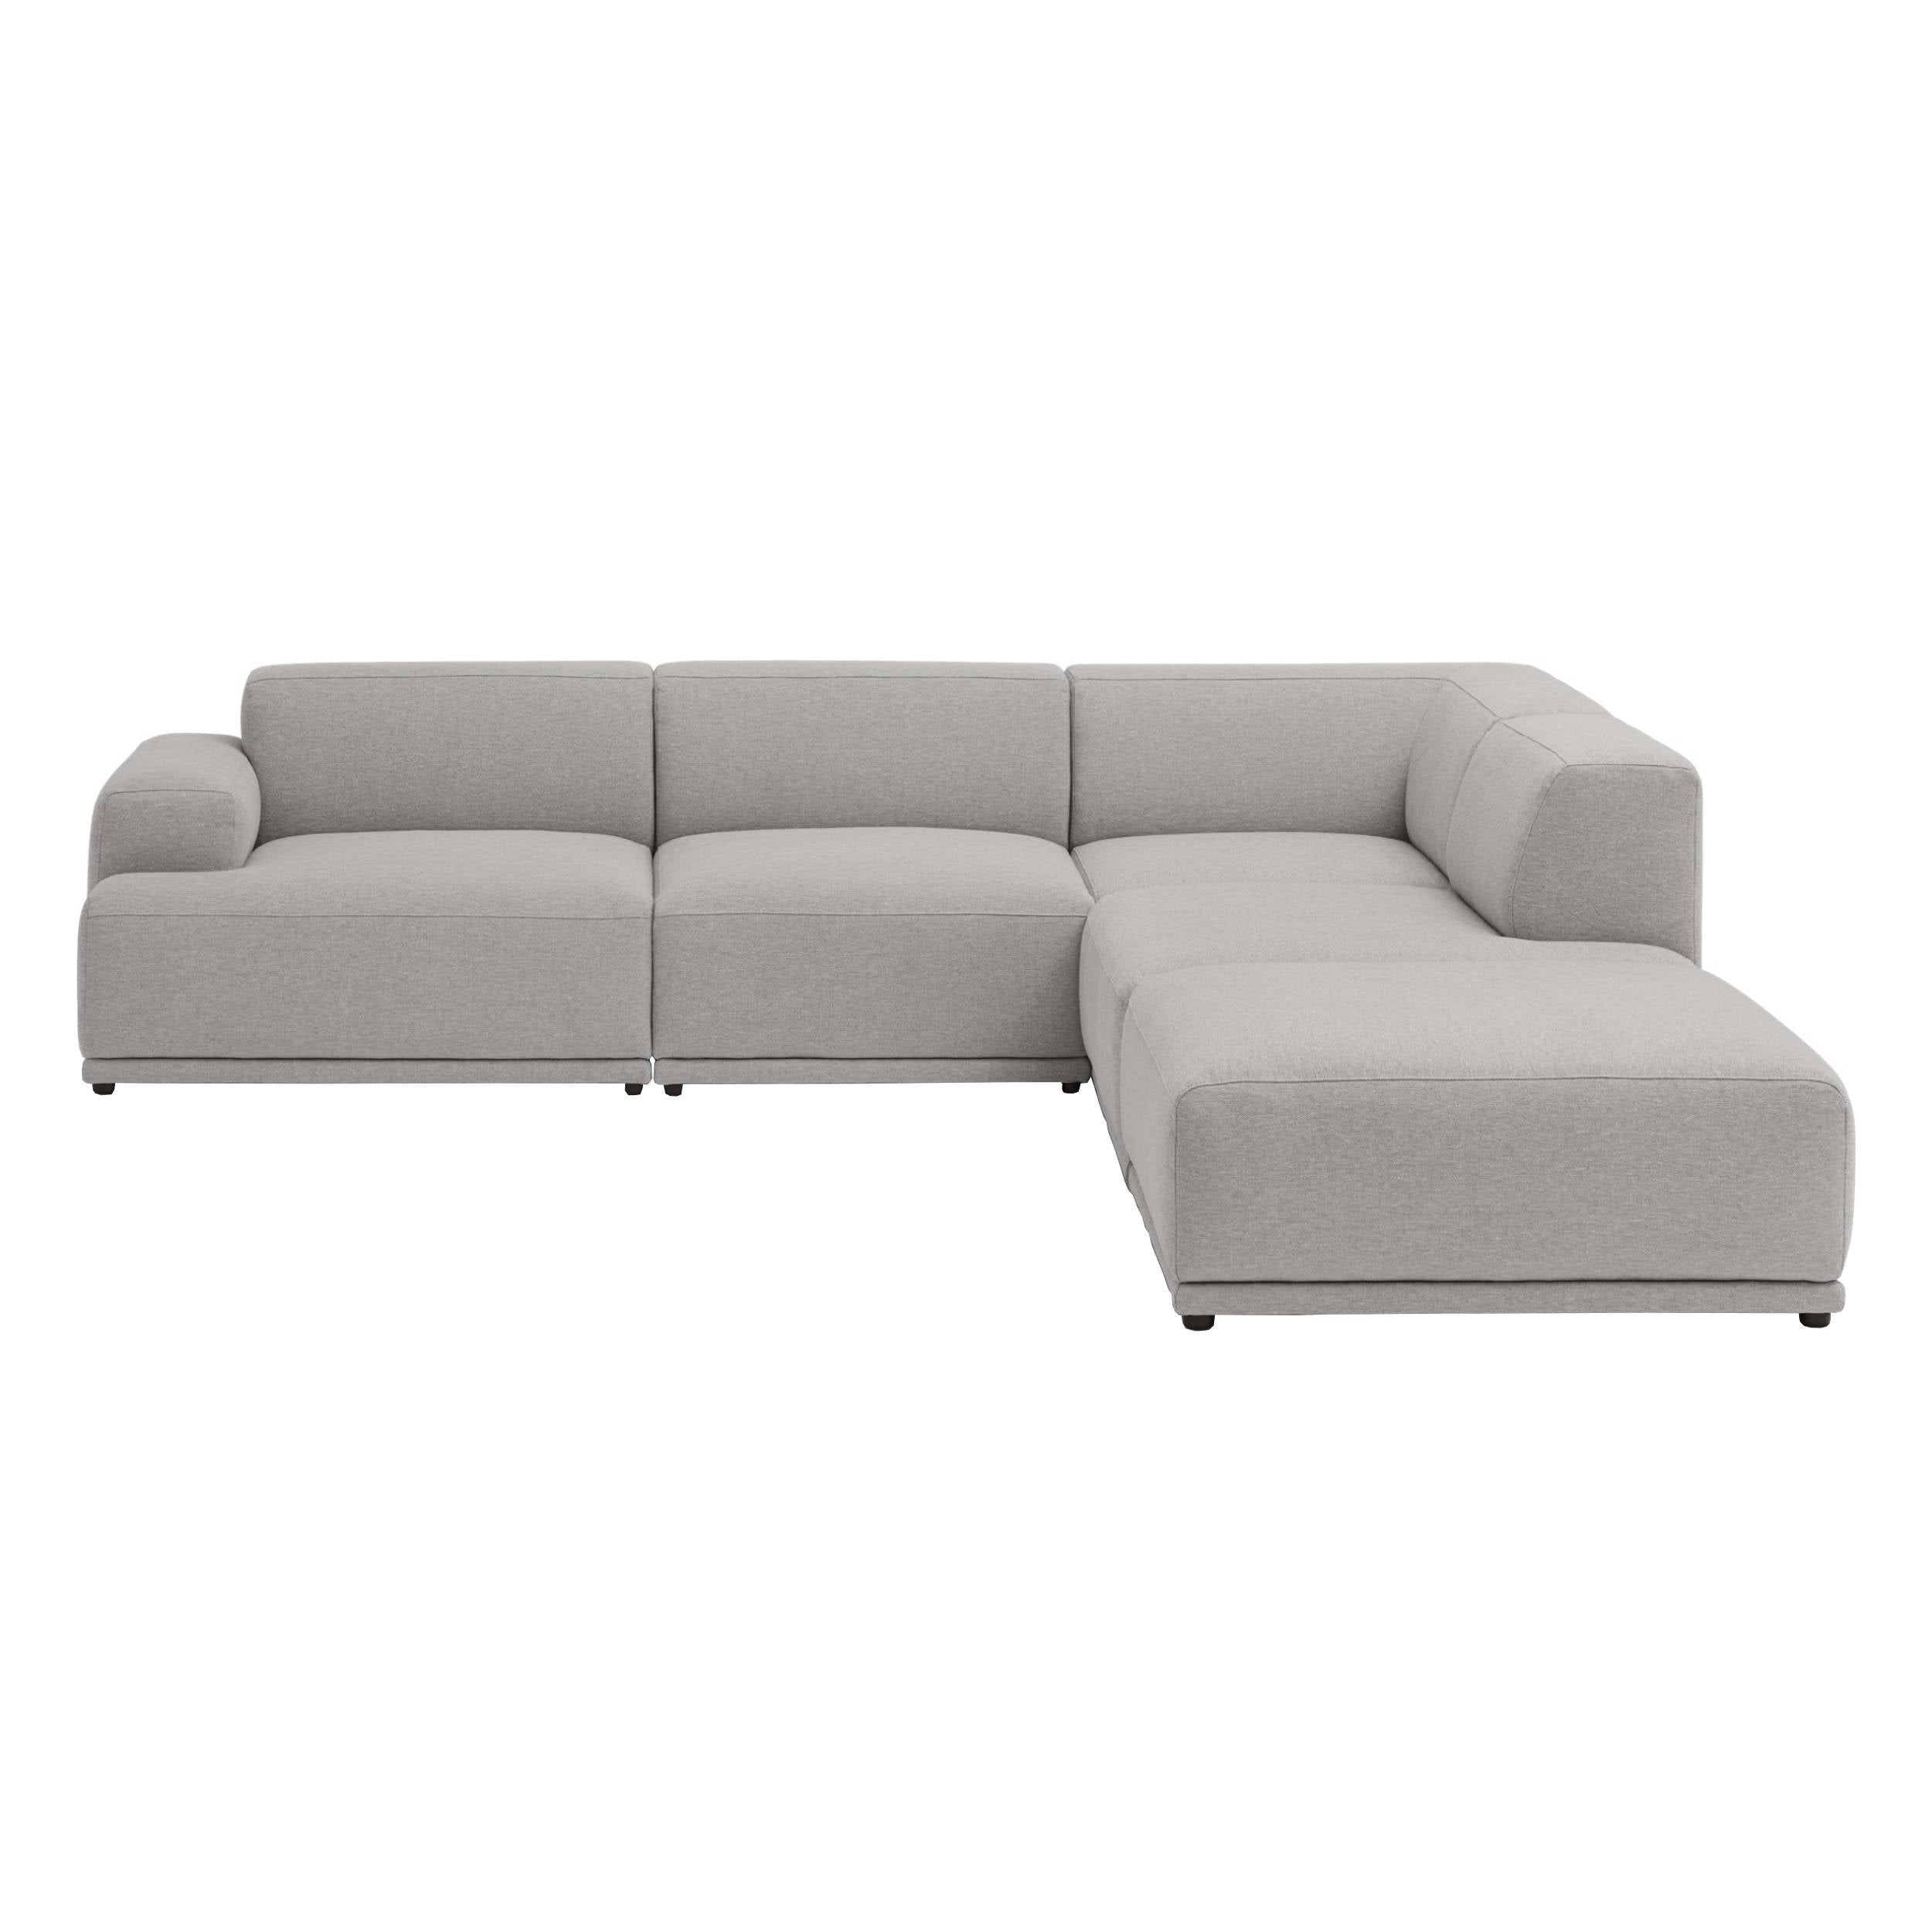 Connect Soft Modular Sofa: Corner + Configuration 2 + Stocked: Clay 12